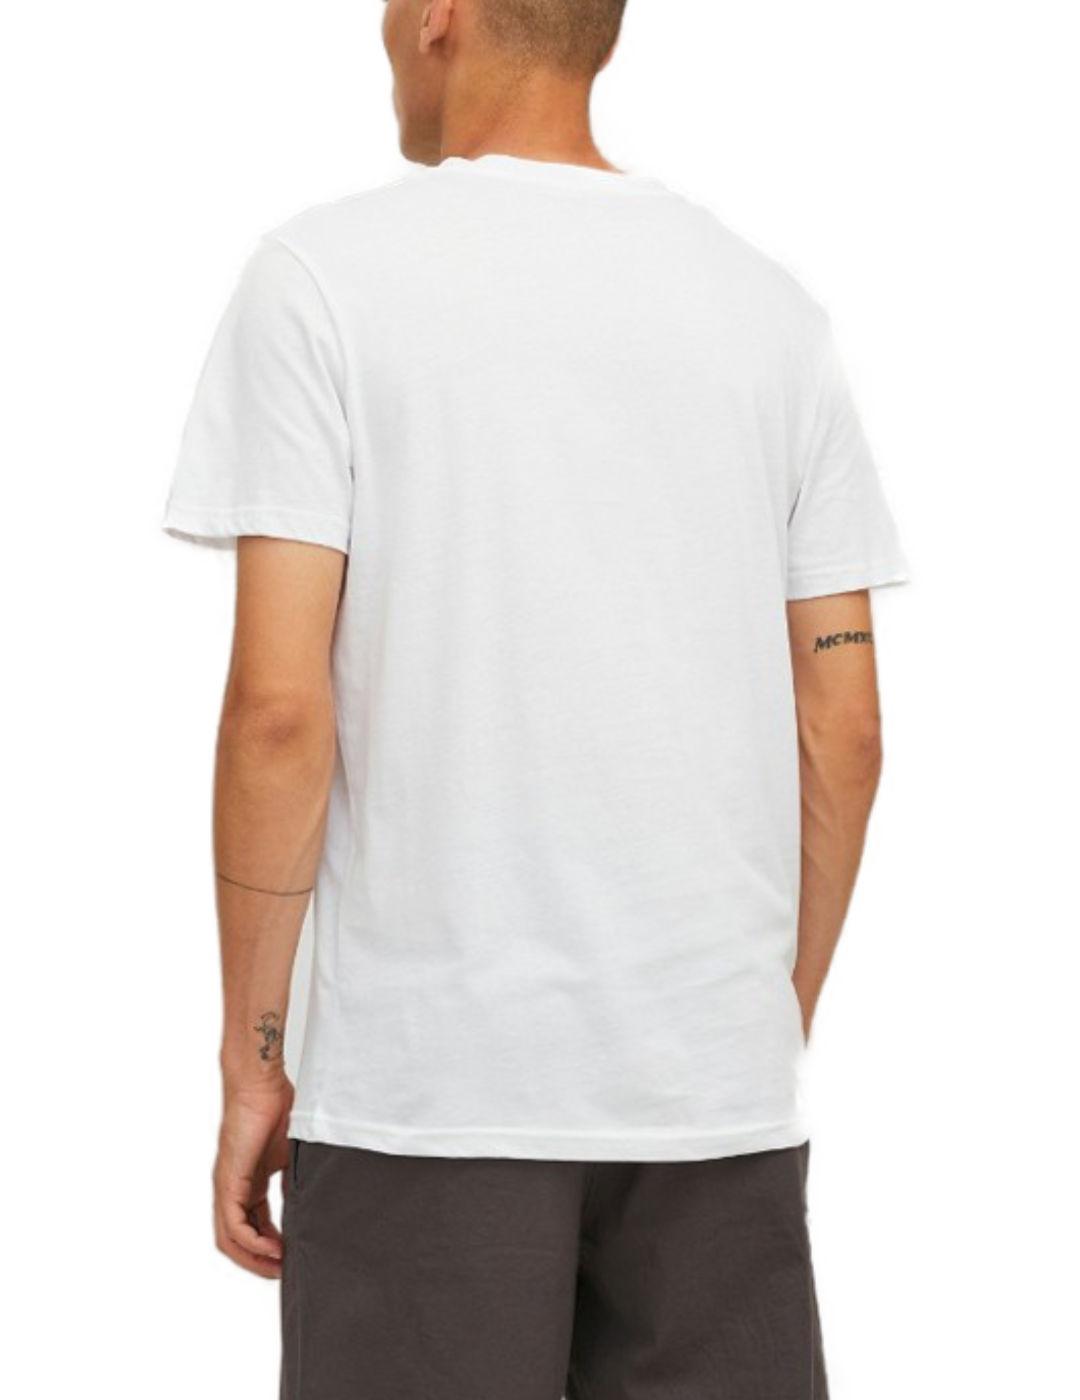 Camiseta Jack&Jones Nate blanca para hombre-b